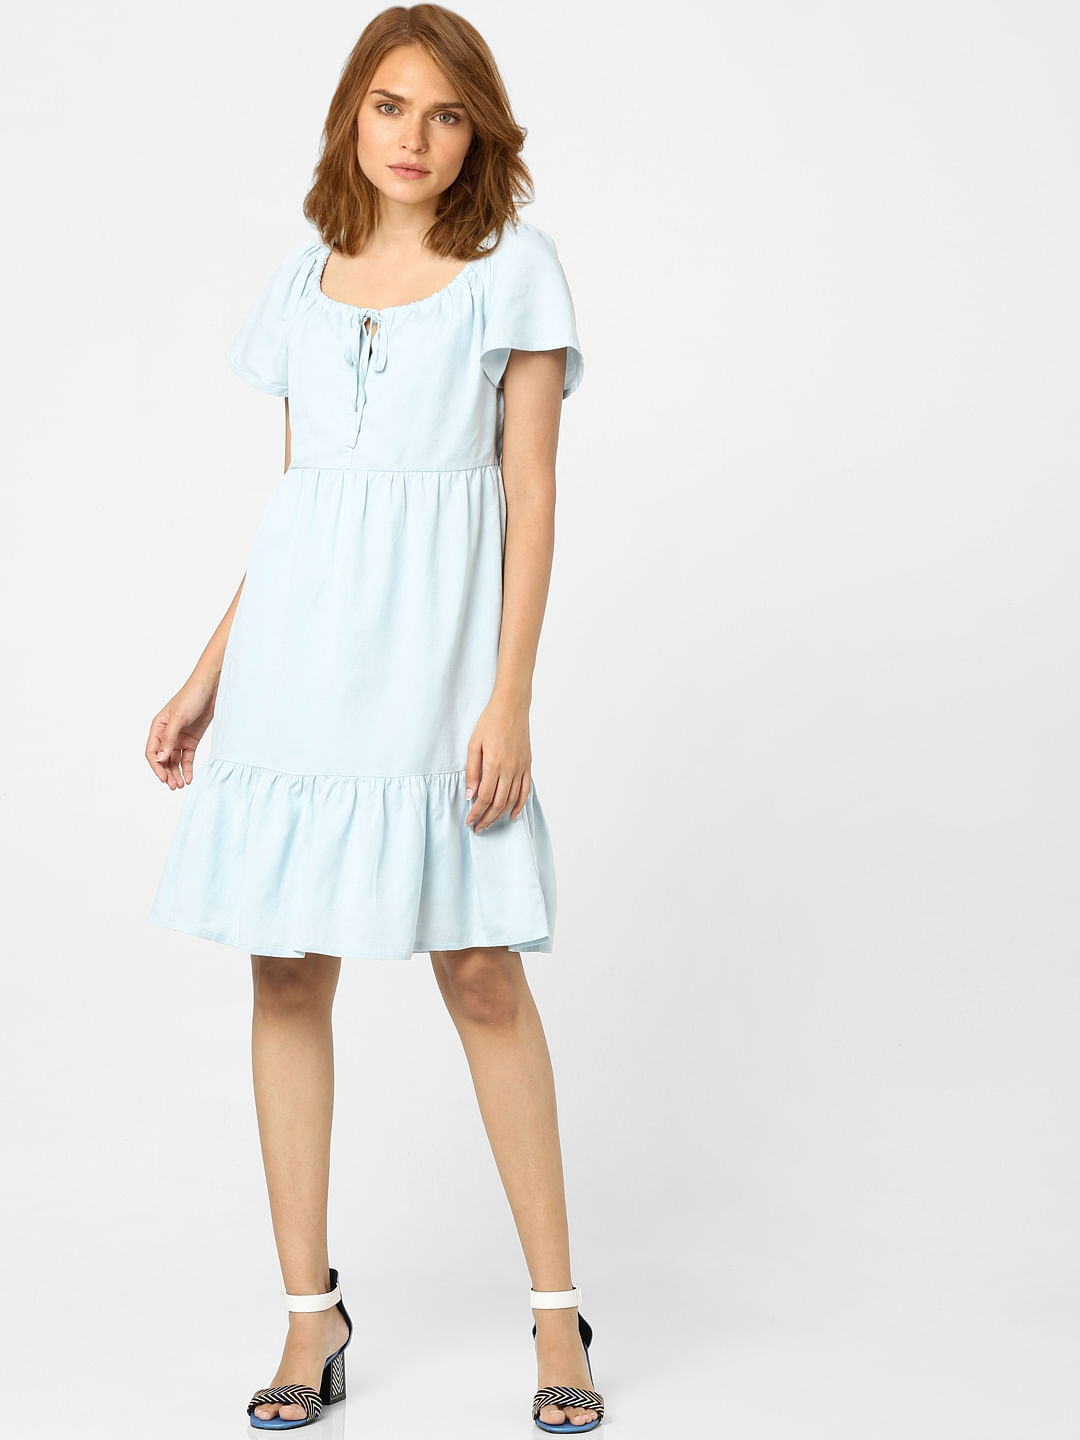 Short Light Blue Lace Prom Dresses, Light Blue Short Lace Formal Gradu –  jbydress